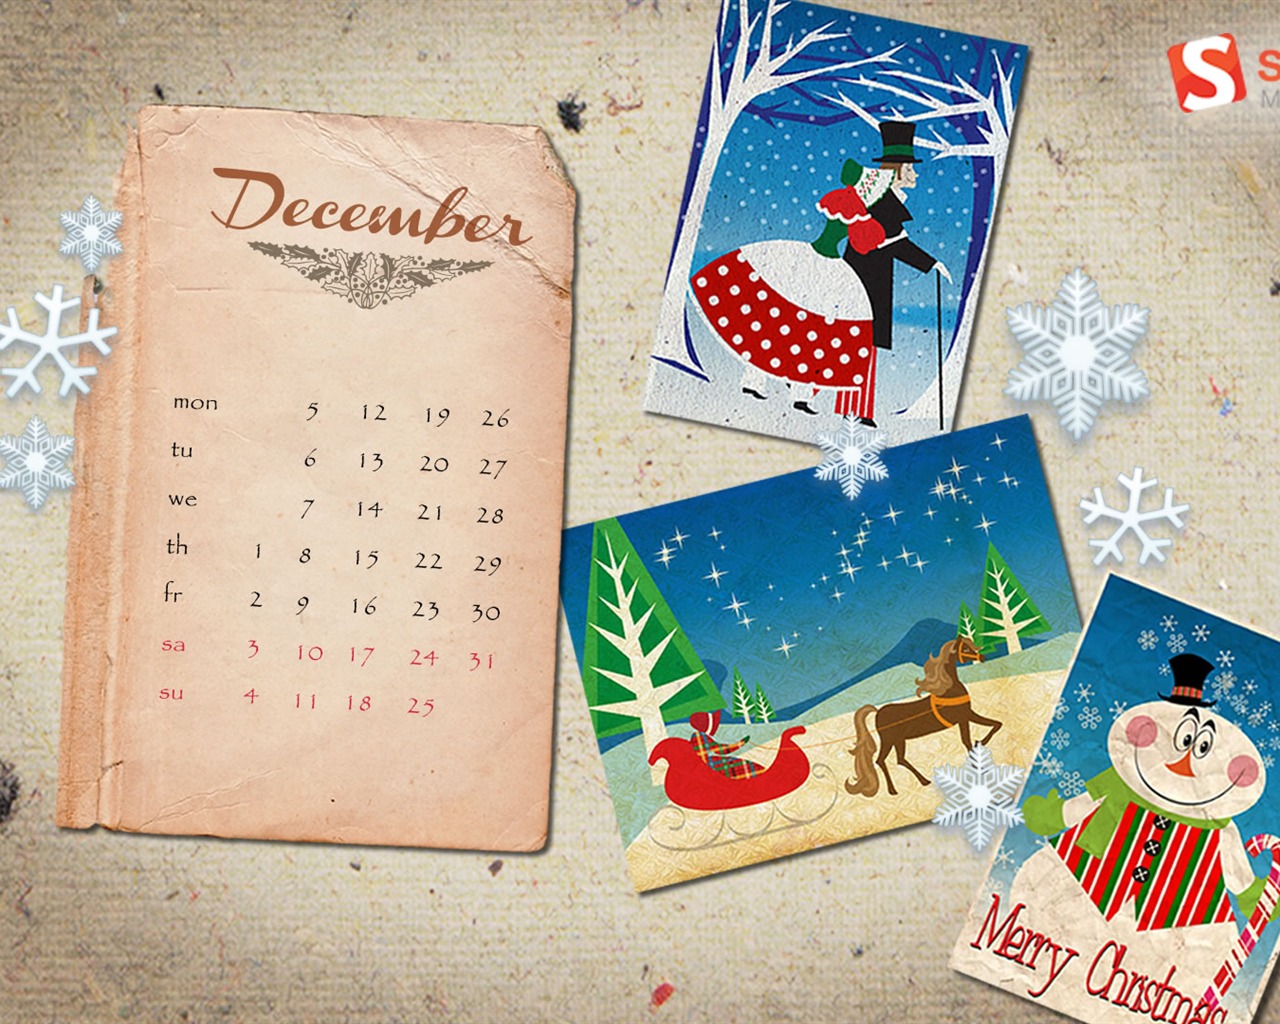 Dezember 2011 Kalender Wallpaper (2) #8 - 1280x1024